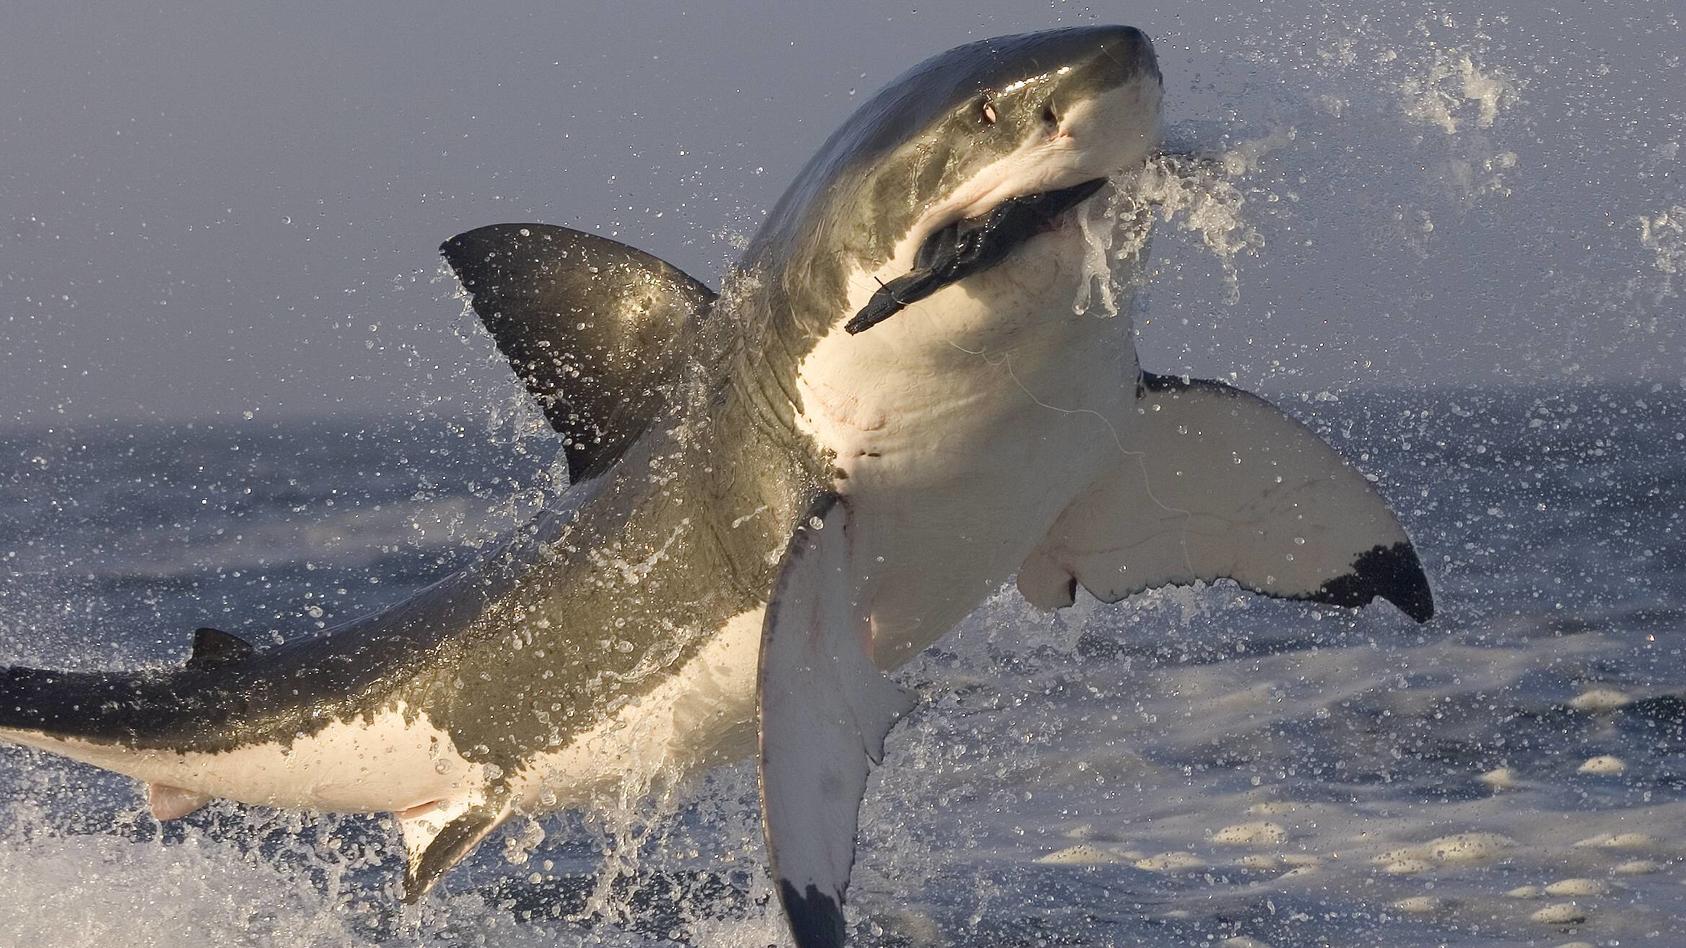  Great white shark Carcharodon carcharias breaching whilst attacking seal decoy, Seal Island, False Bay South Africa. PUBLICATIONxINxGERxSUIxAUTxONLY 1444977 Chrisx&xMoniquexFallows